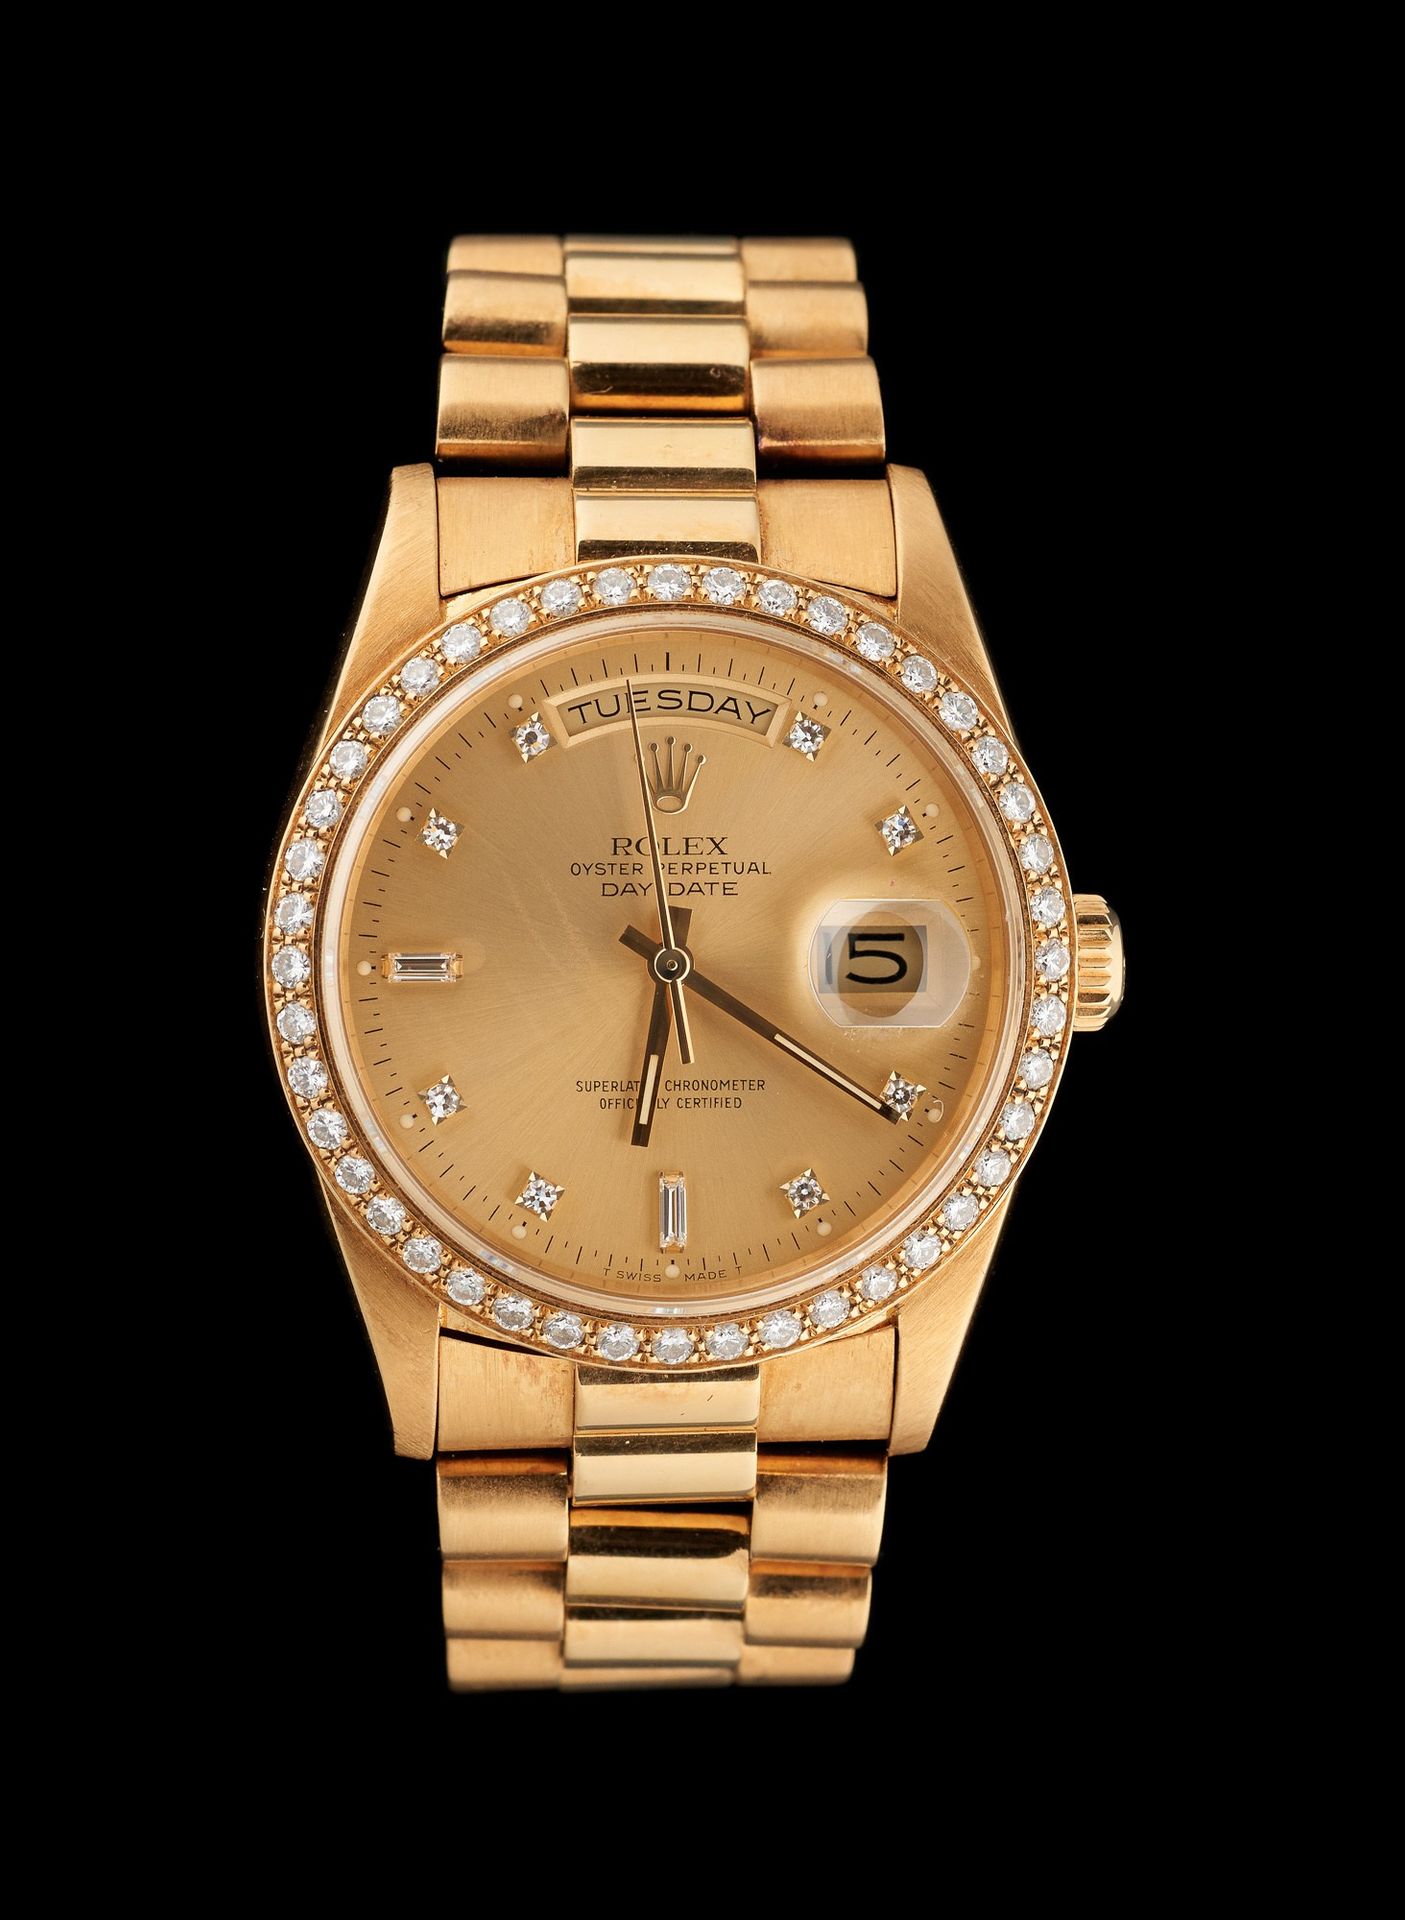 ROLEX 时计：18K金腕表，钻石环绕的表盘上有十颗钻石的时针。

劳力士制造，型号为 "Oyster Perpetual Day Date Automati&hellip;